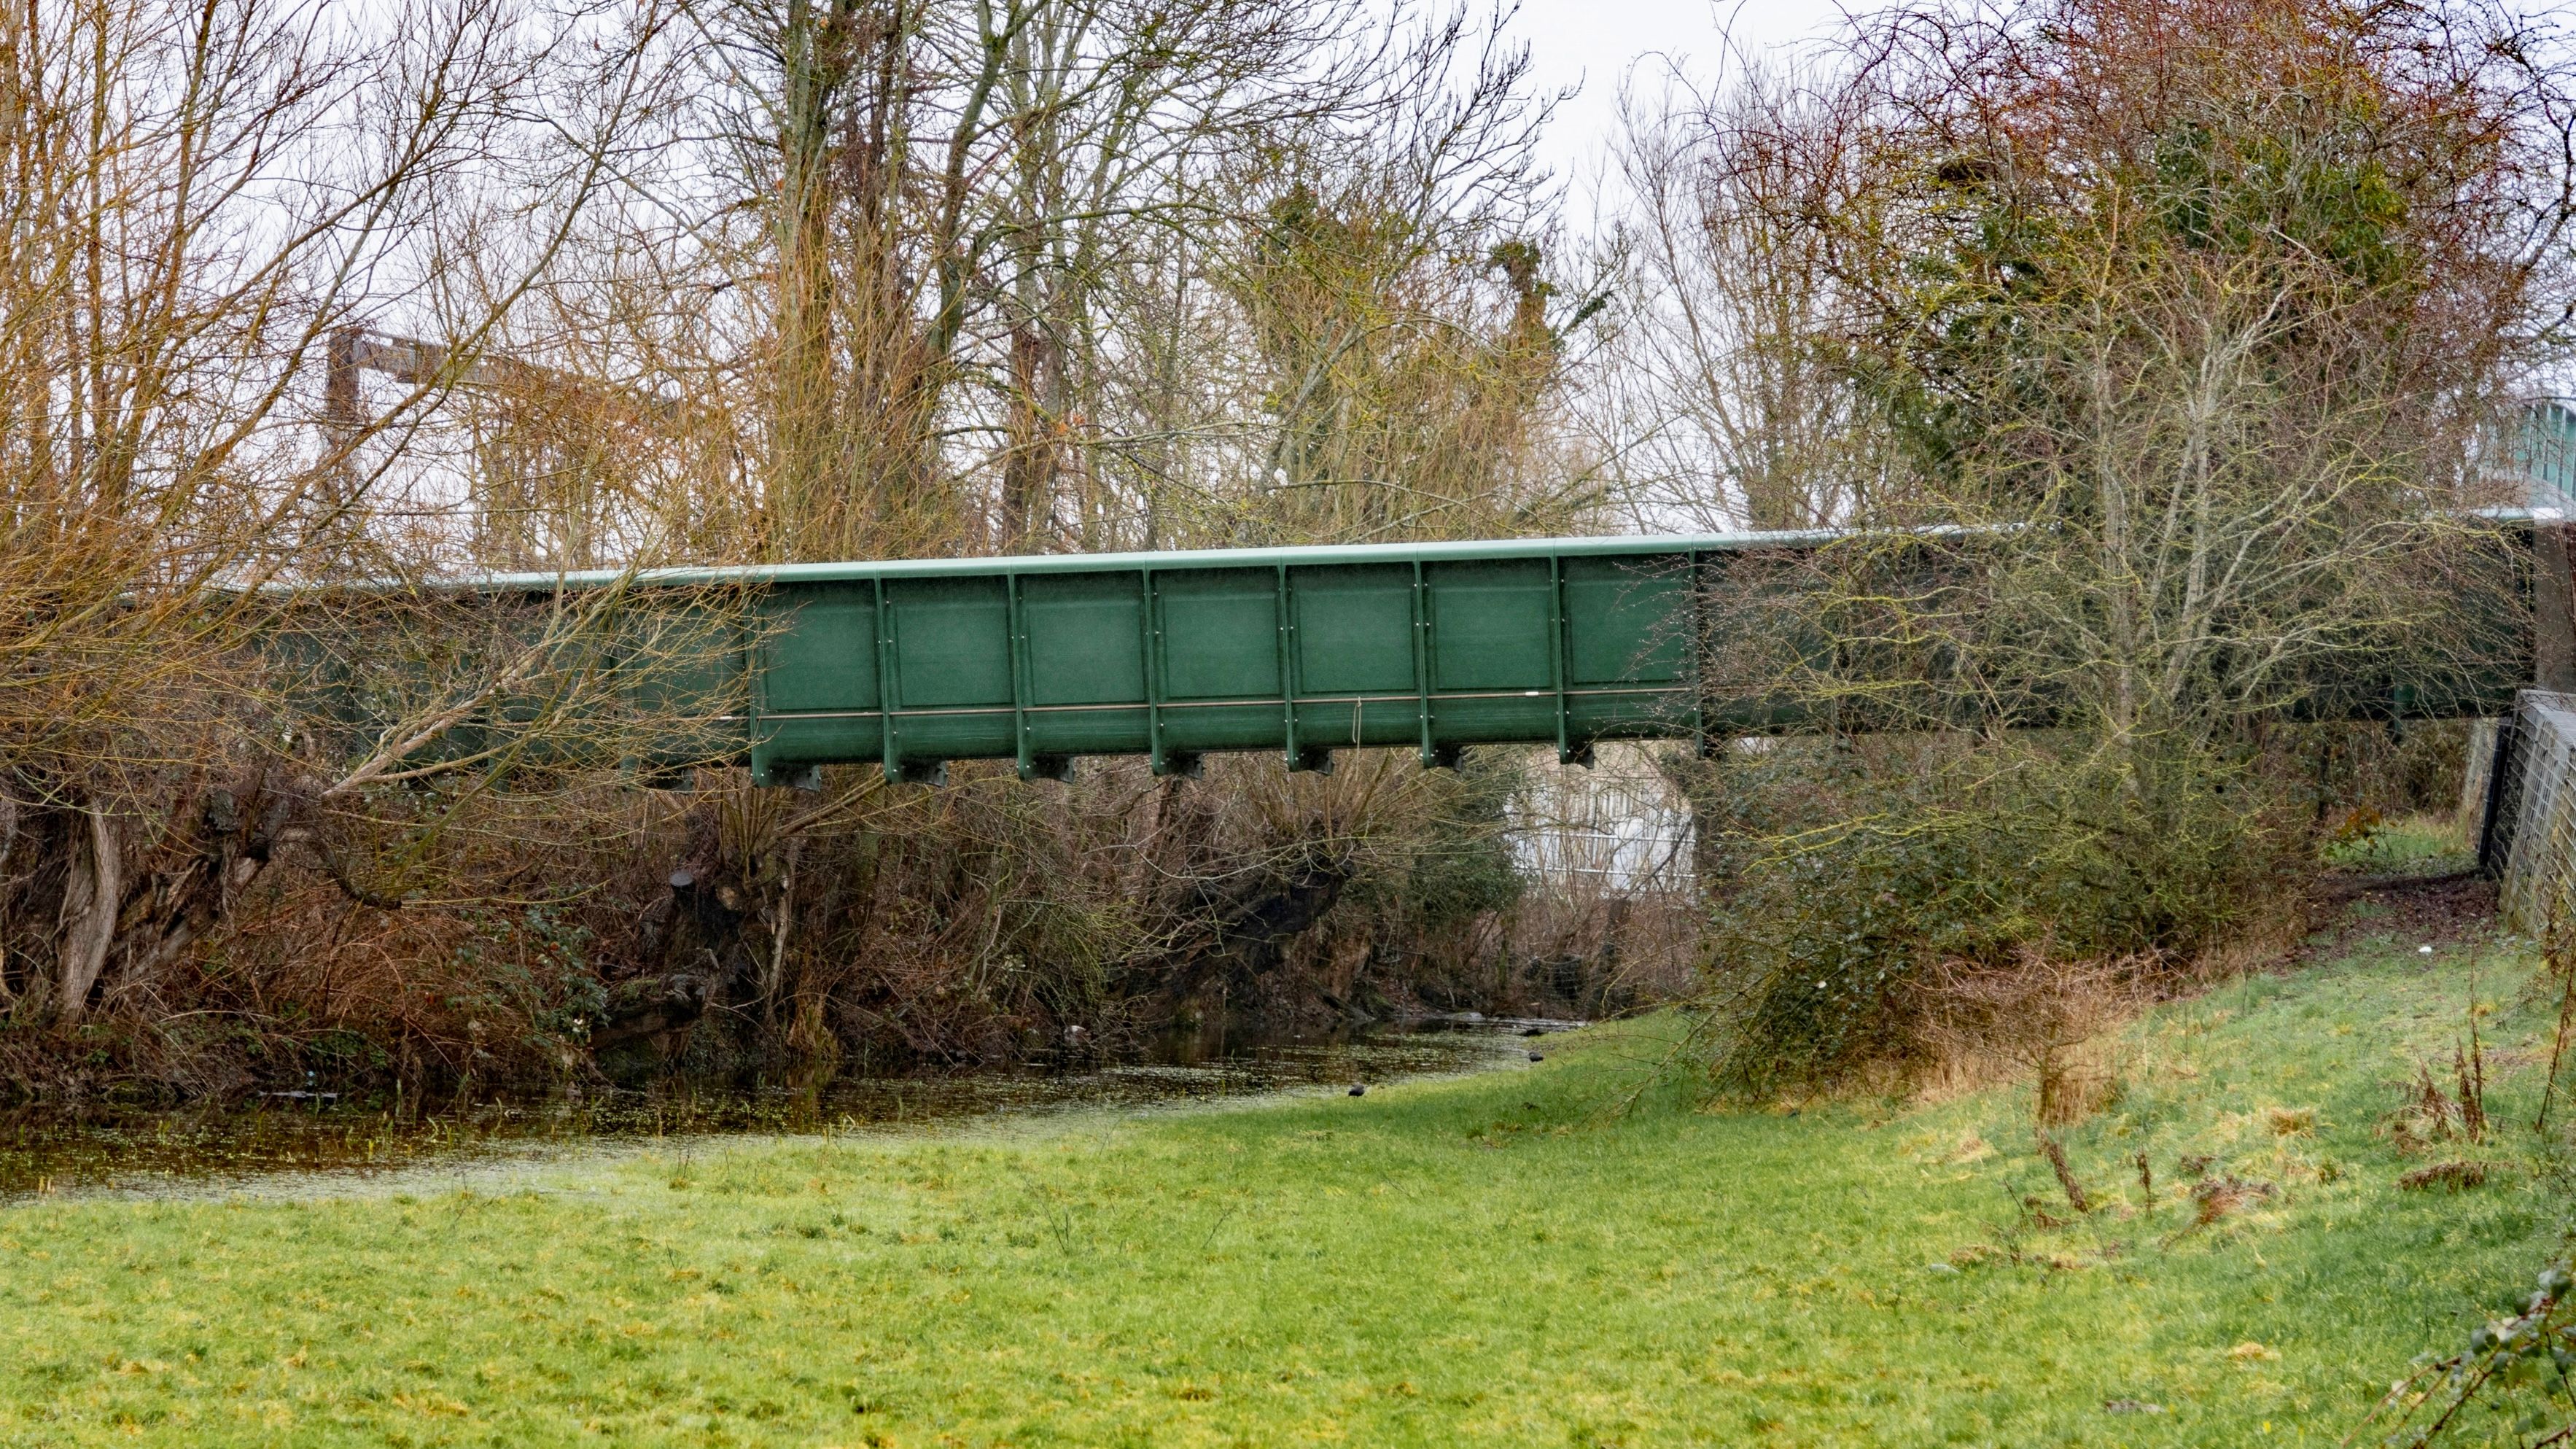 Figure shows a FRP foot bridge in Oxford